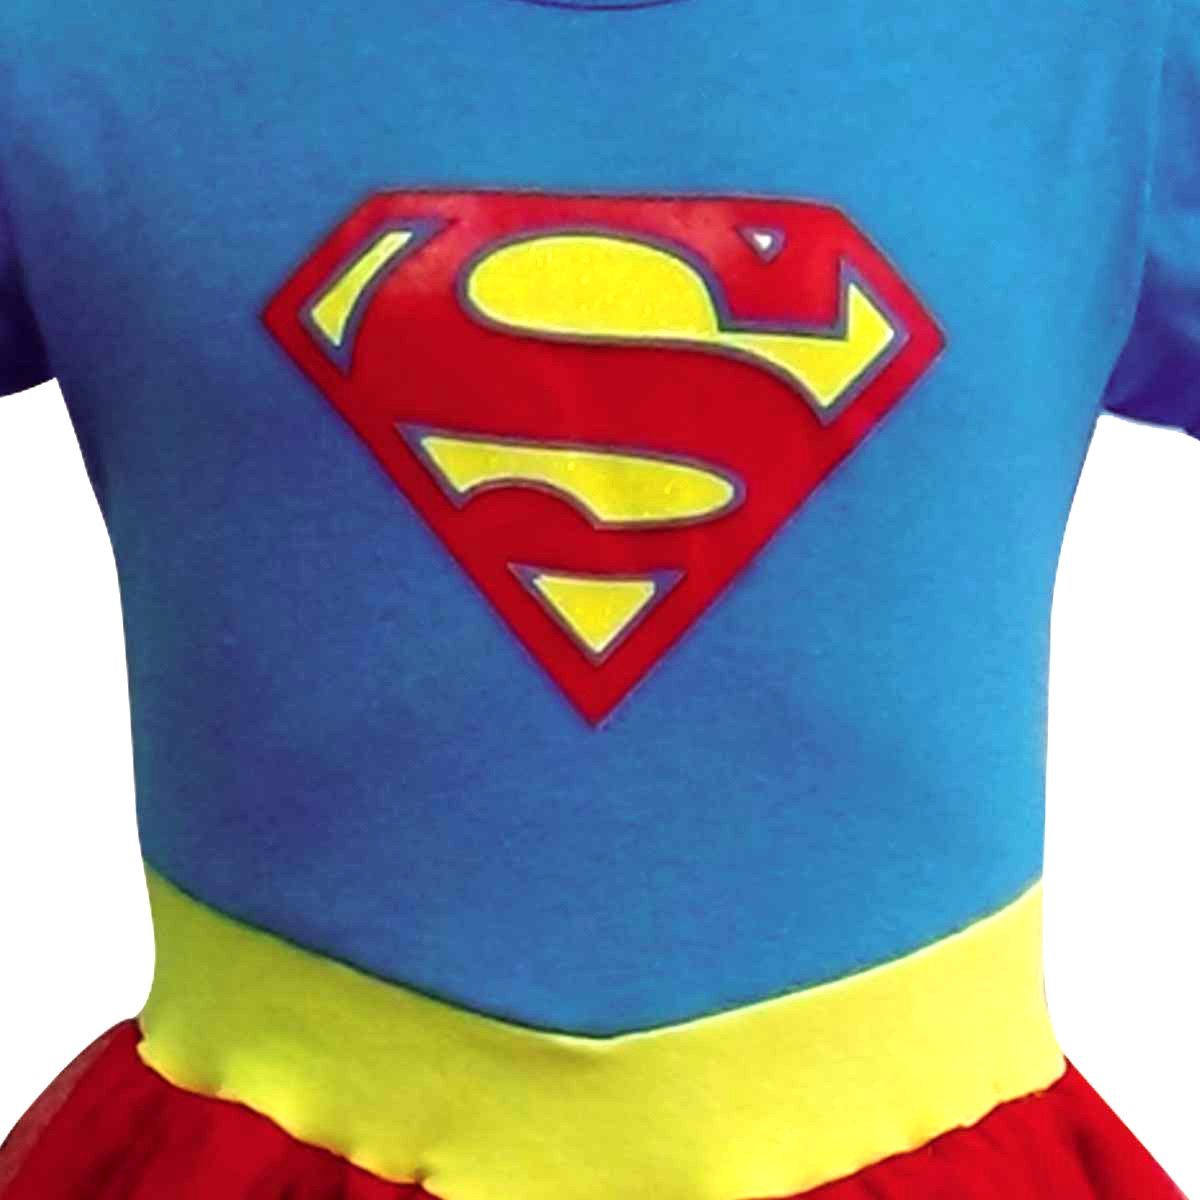 Vestido con Tul Estampado Superhero Girls